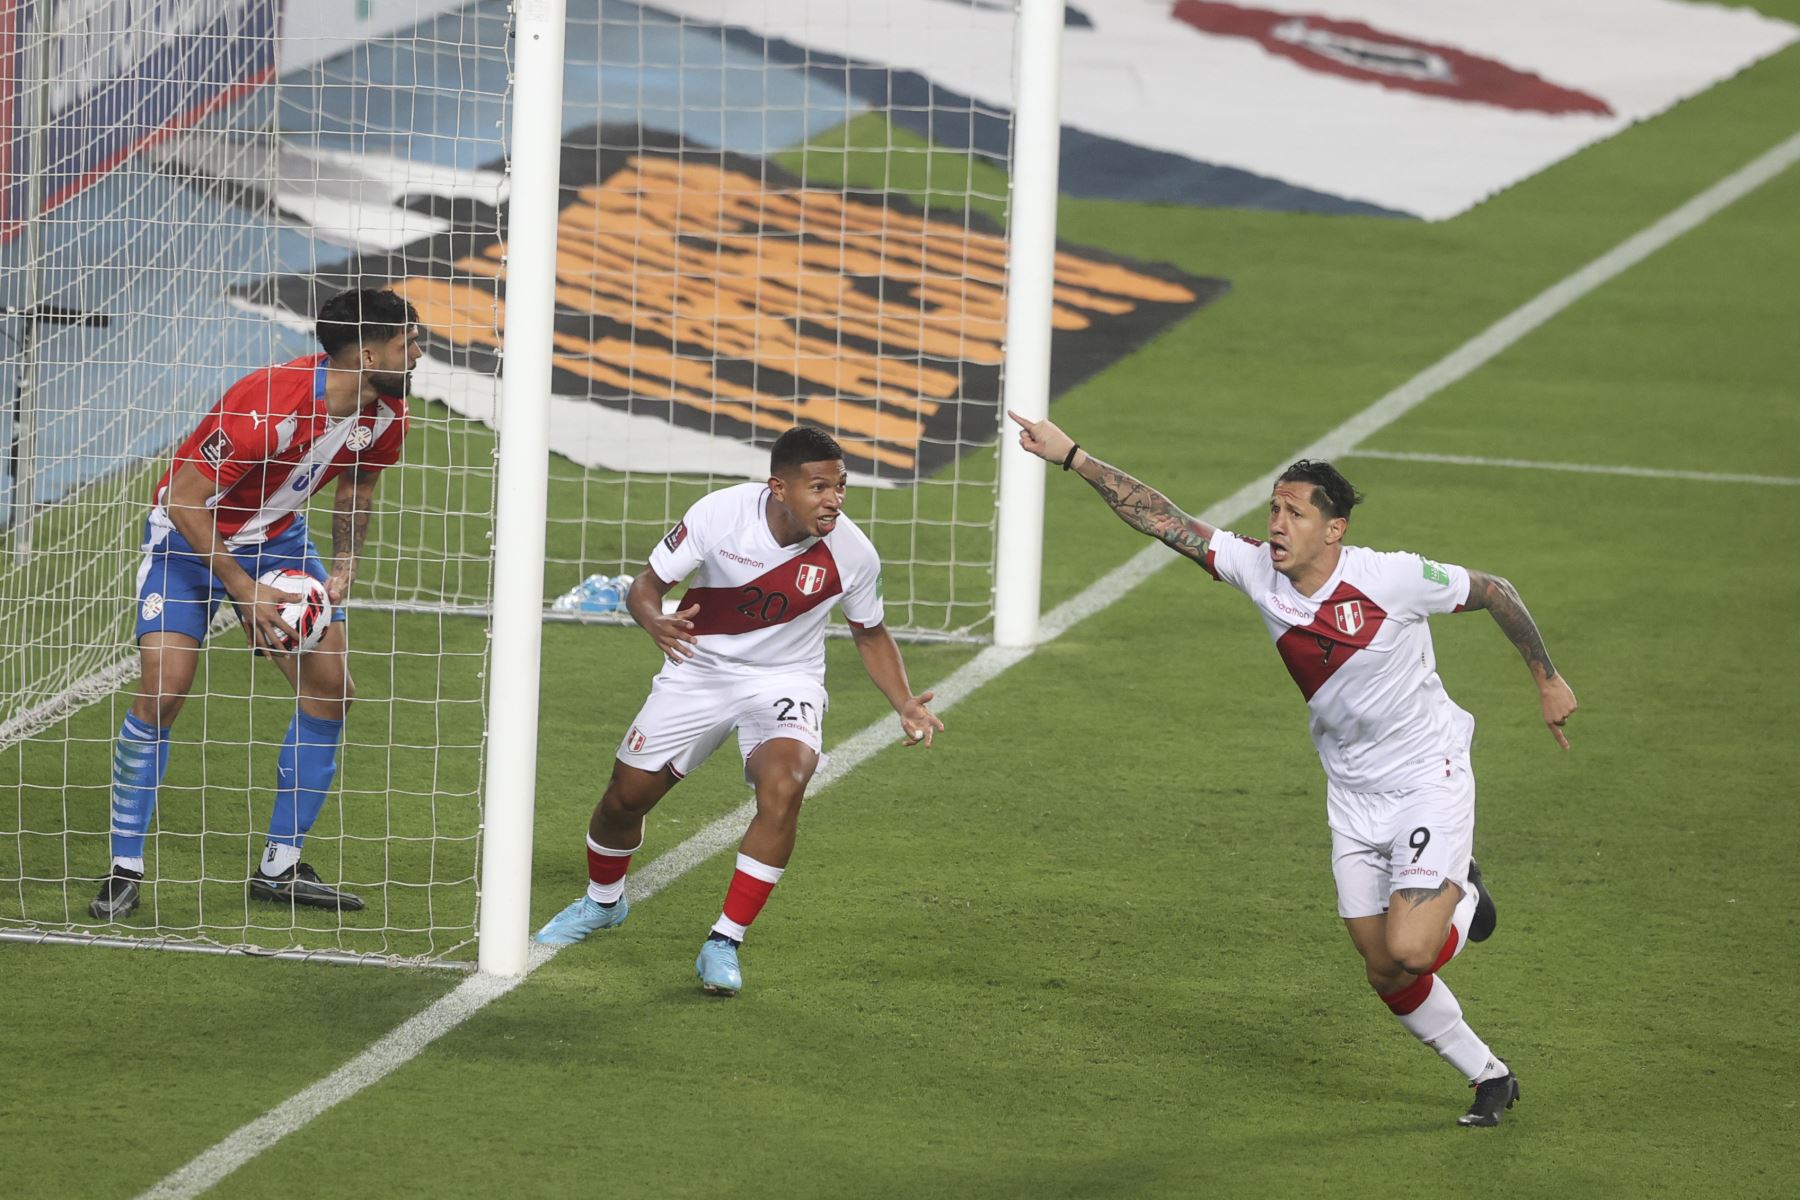 Para Perú será una final, para paraguay será salvar el honor en una mala clasificatoria. Foto: Vidal Tarqui